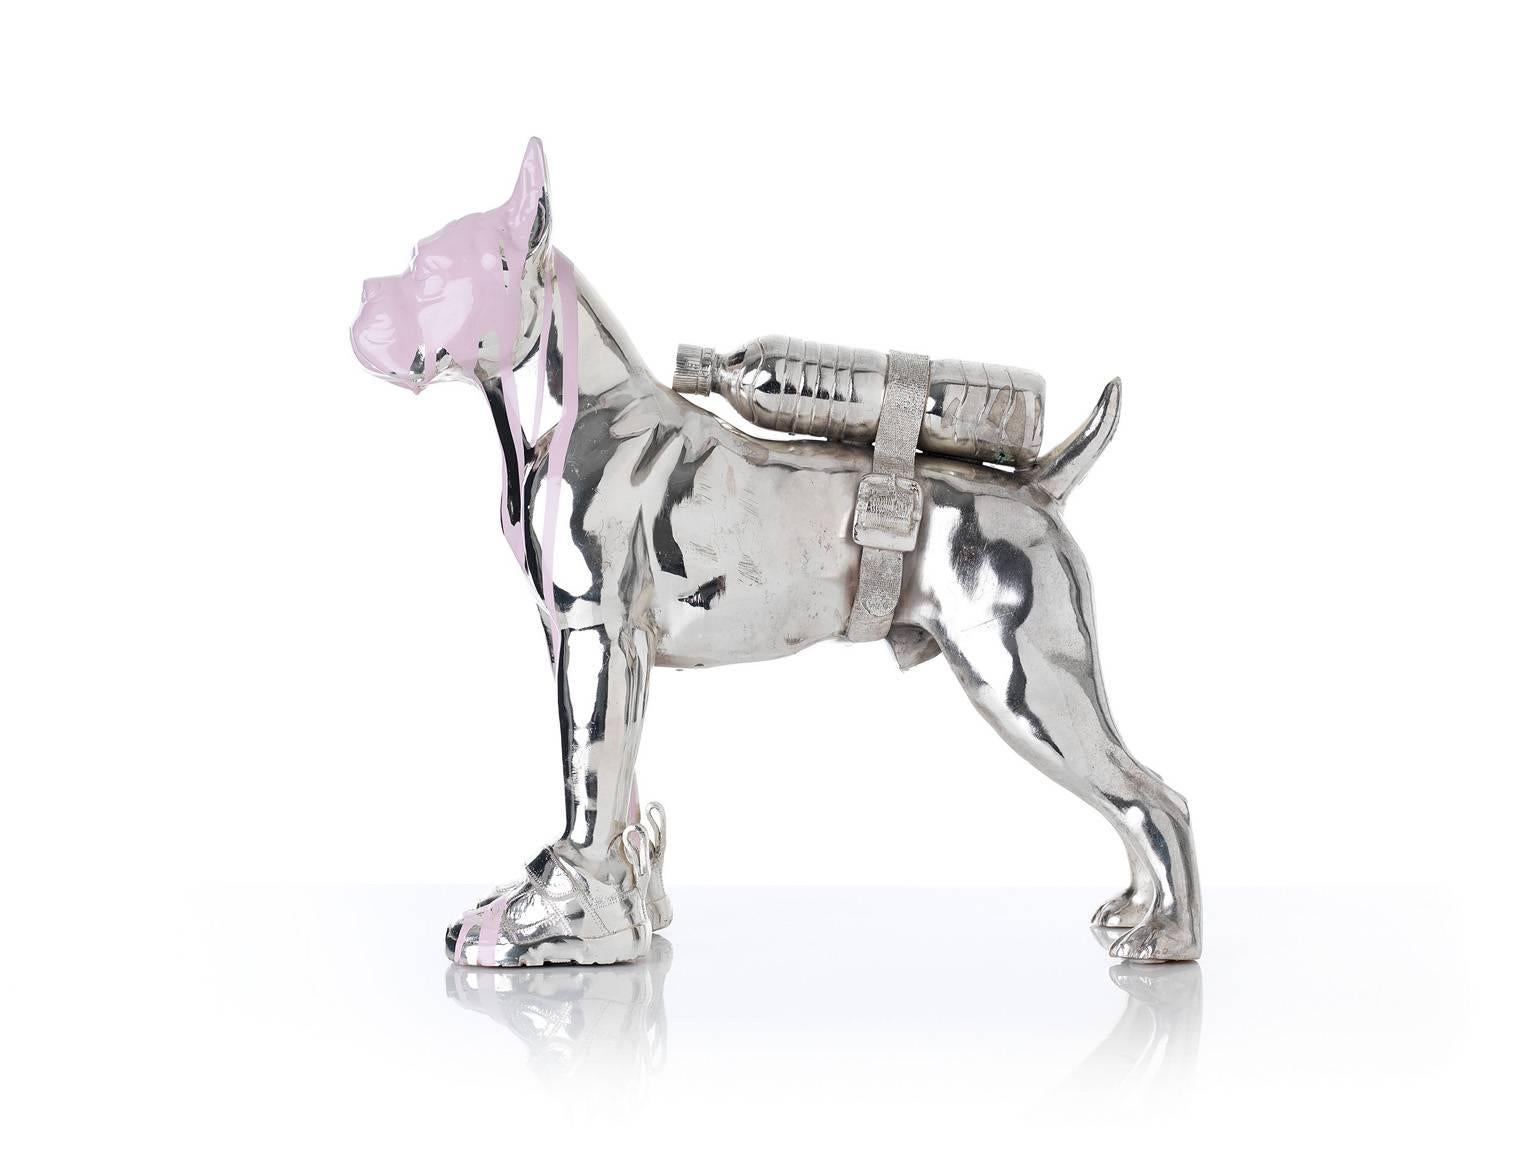 Cloned Bulldog with pet bottle.  - Pop Art Sculpture by William Sweetlove